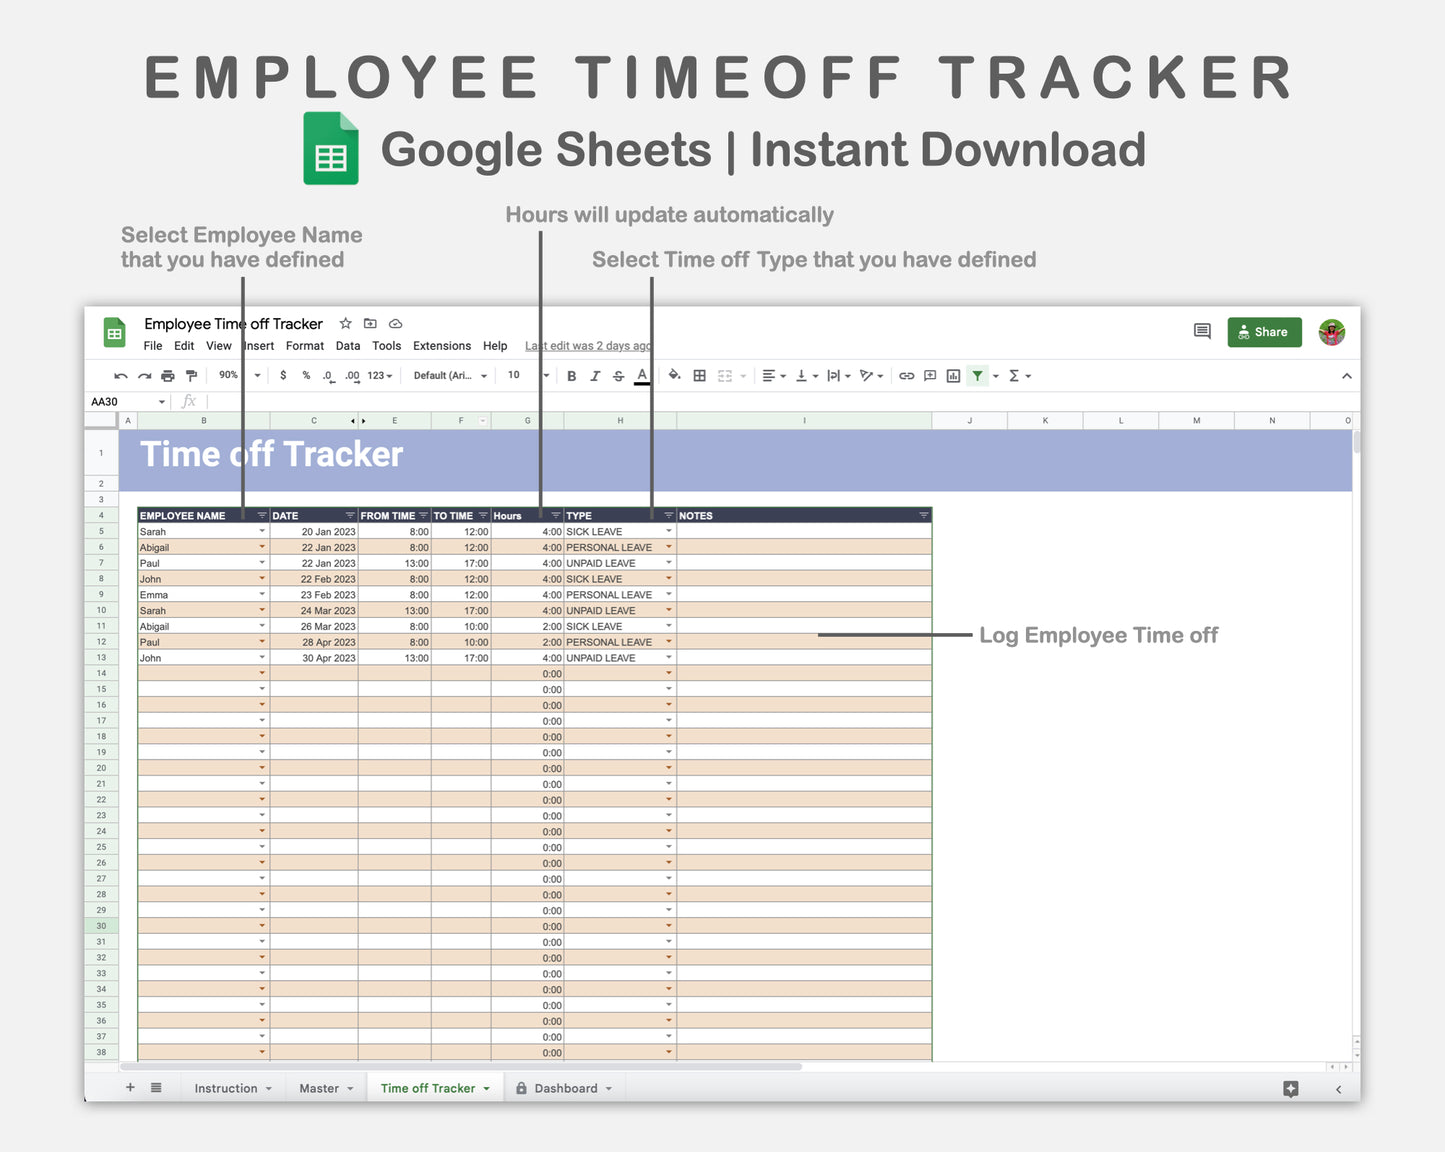 Google Sheets - Employee Time off Tracker - Sweet